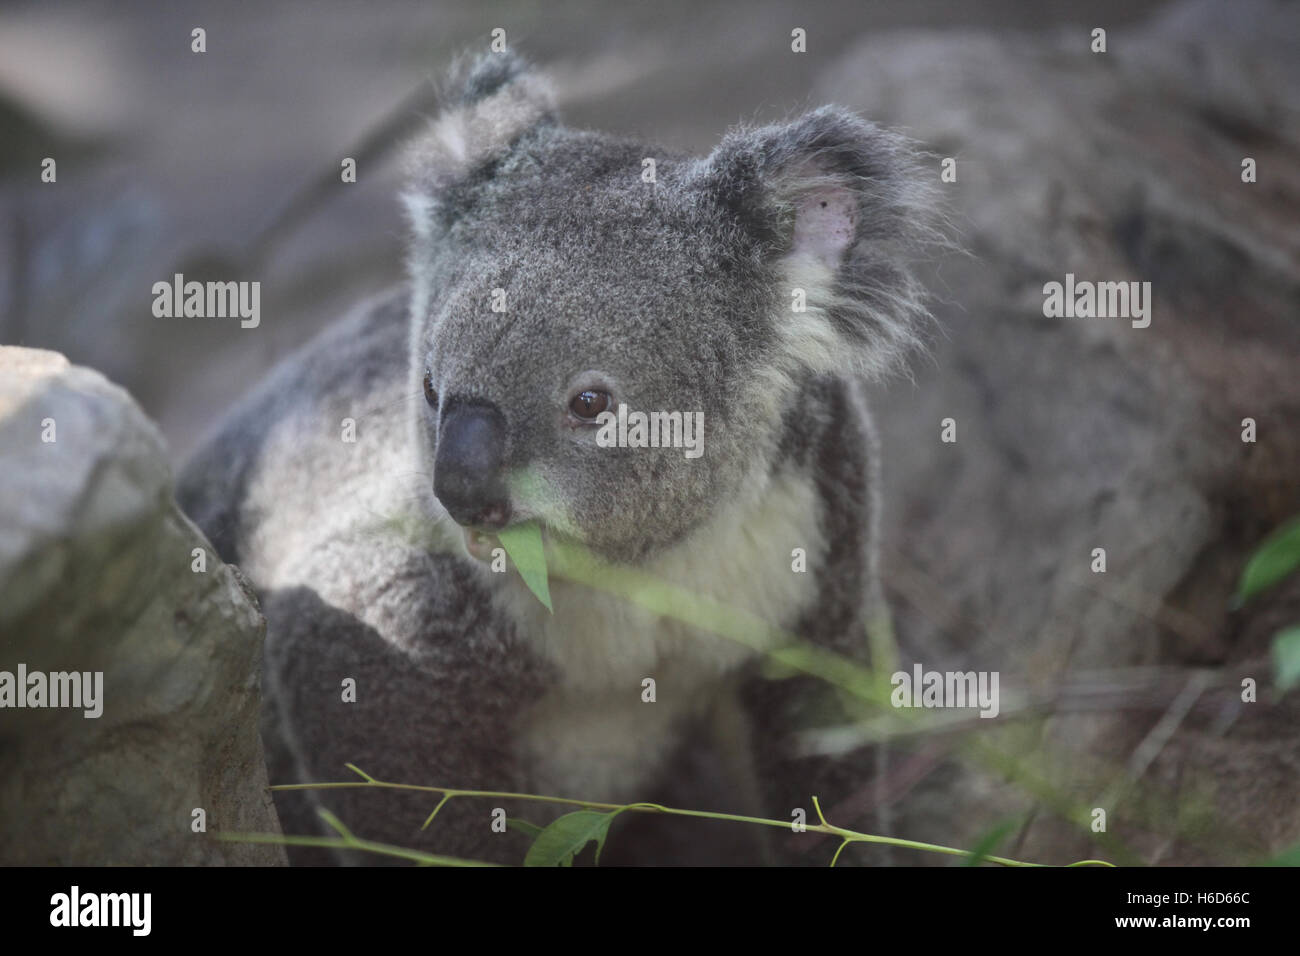 Koala is a small marsupial animal, Thailand, Southeast Asia Stock Photo -  Alamy